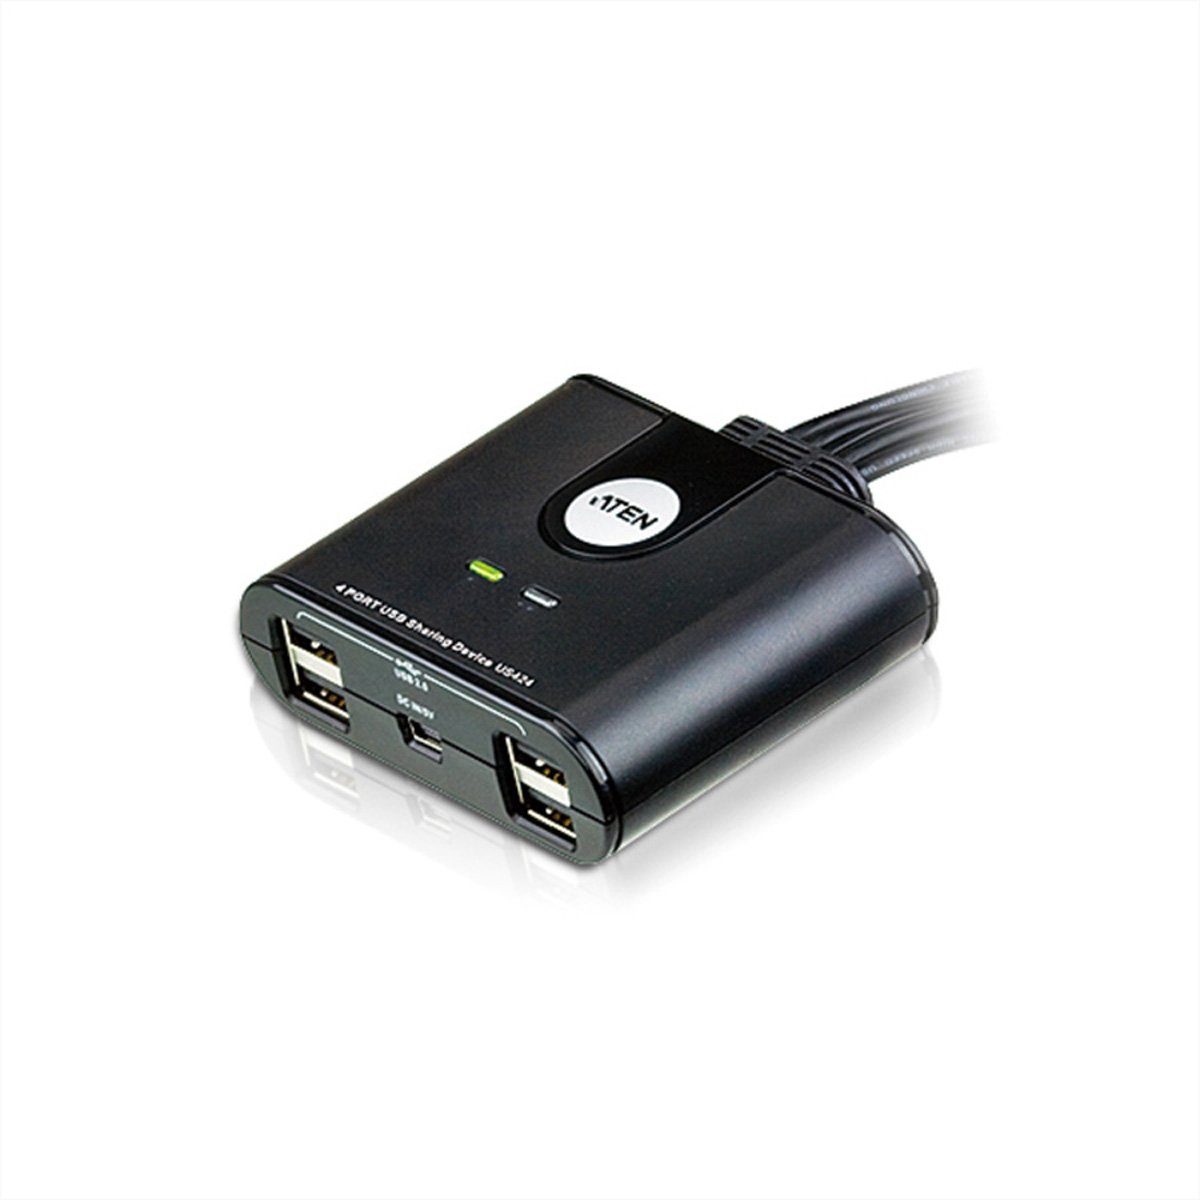 Aten US424 USB 2.0-Peripheriegeräte-Switch mit 4 Ports Computer-Adapter